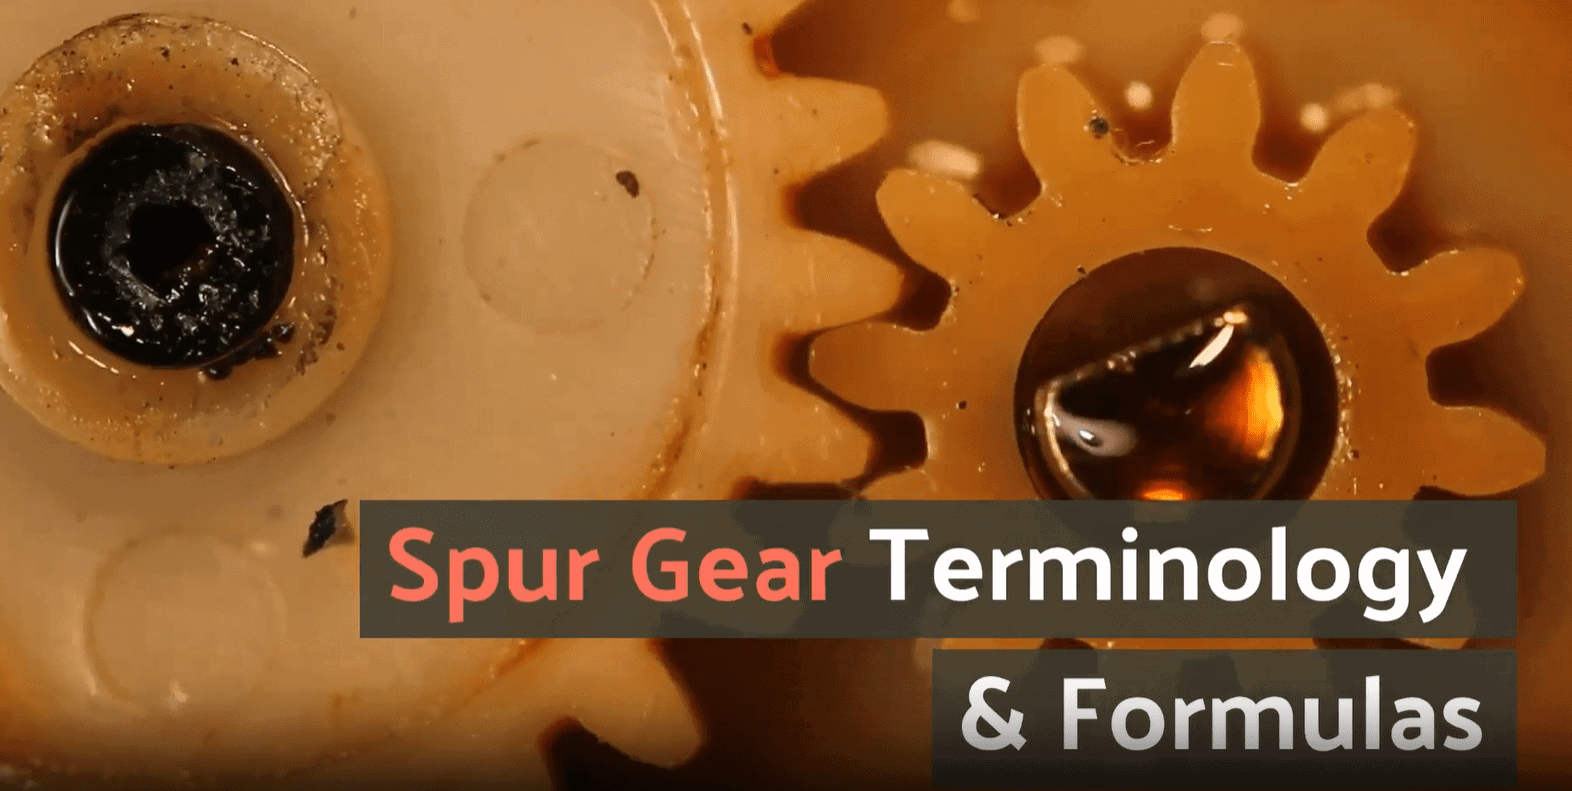 Spur Gear Terminology & Formulas